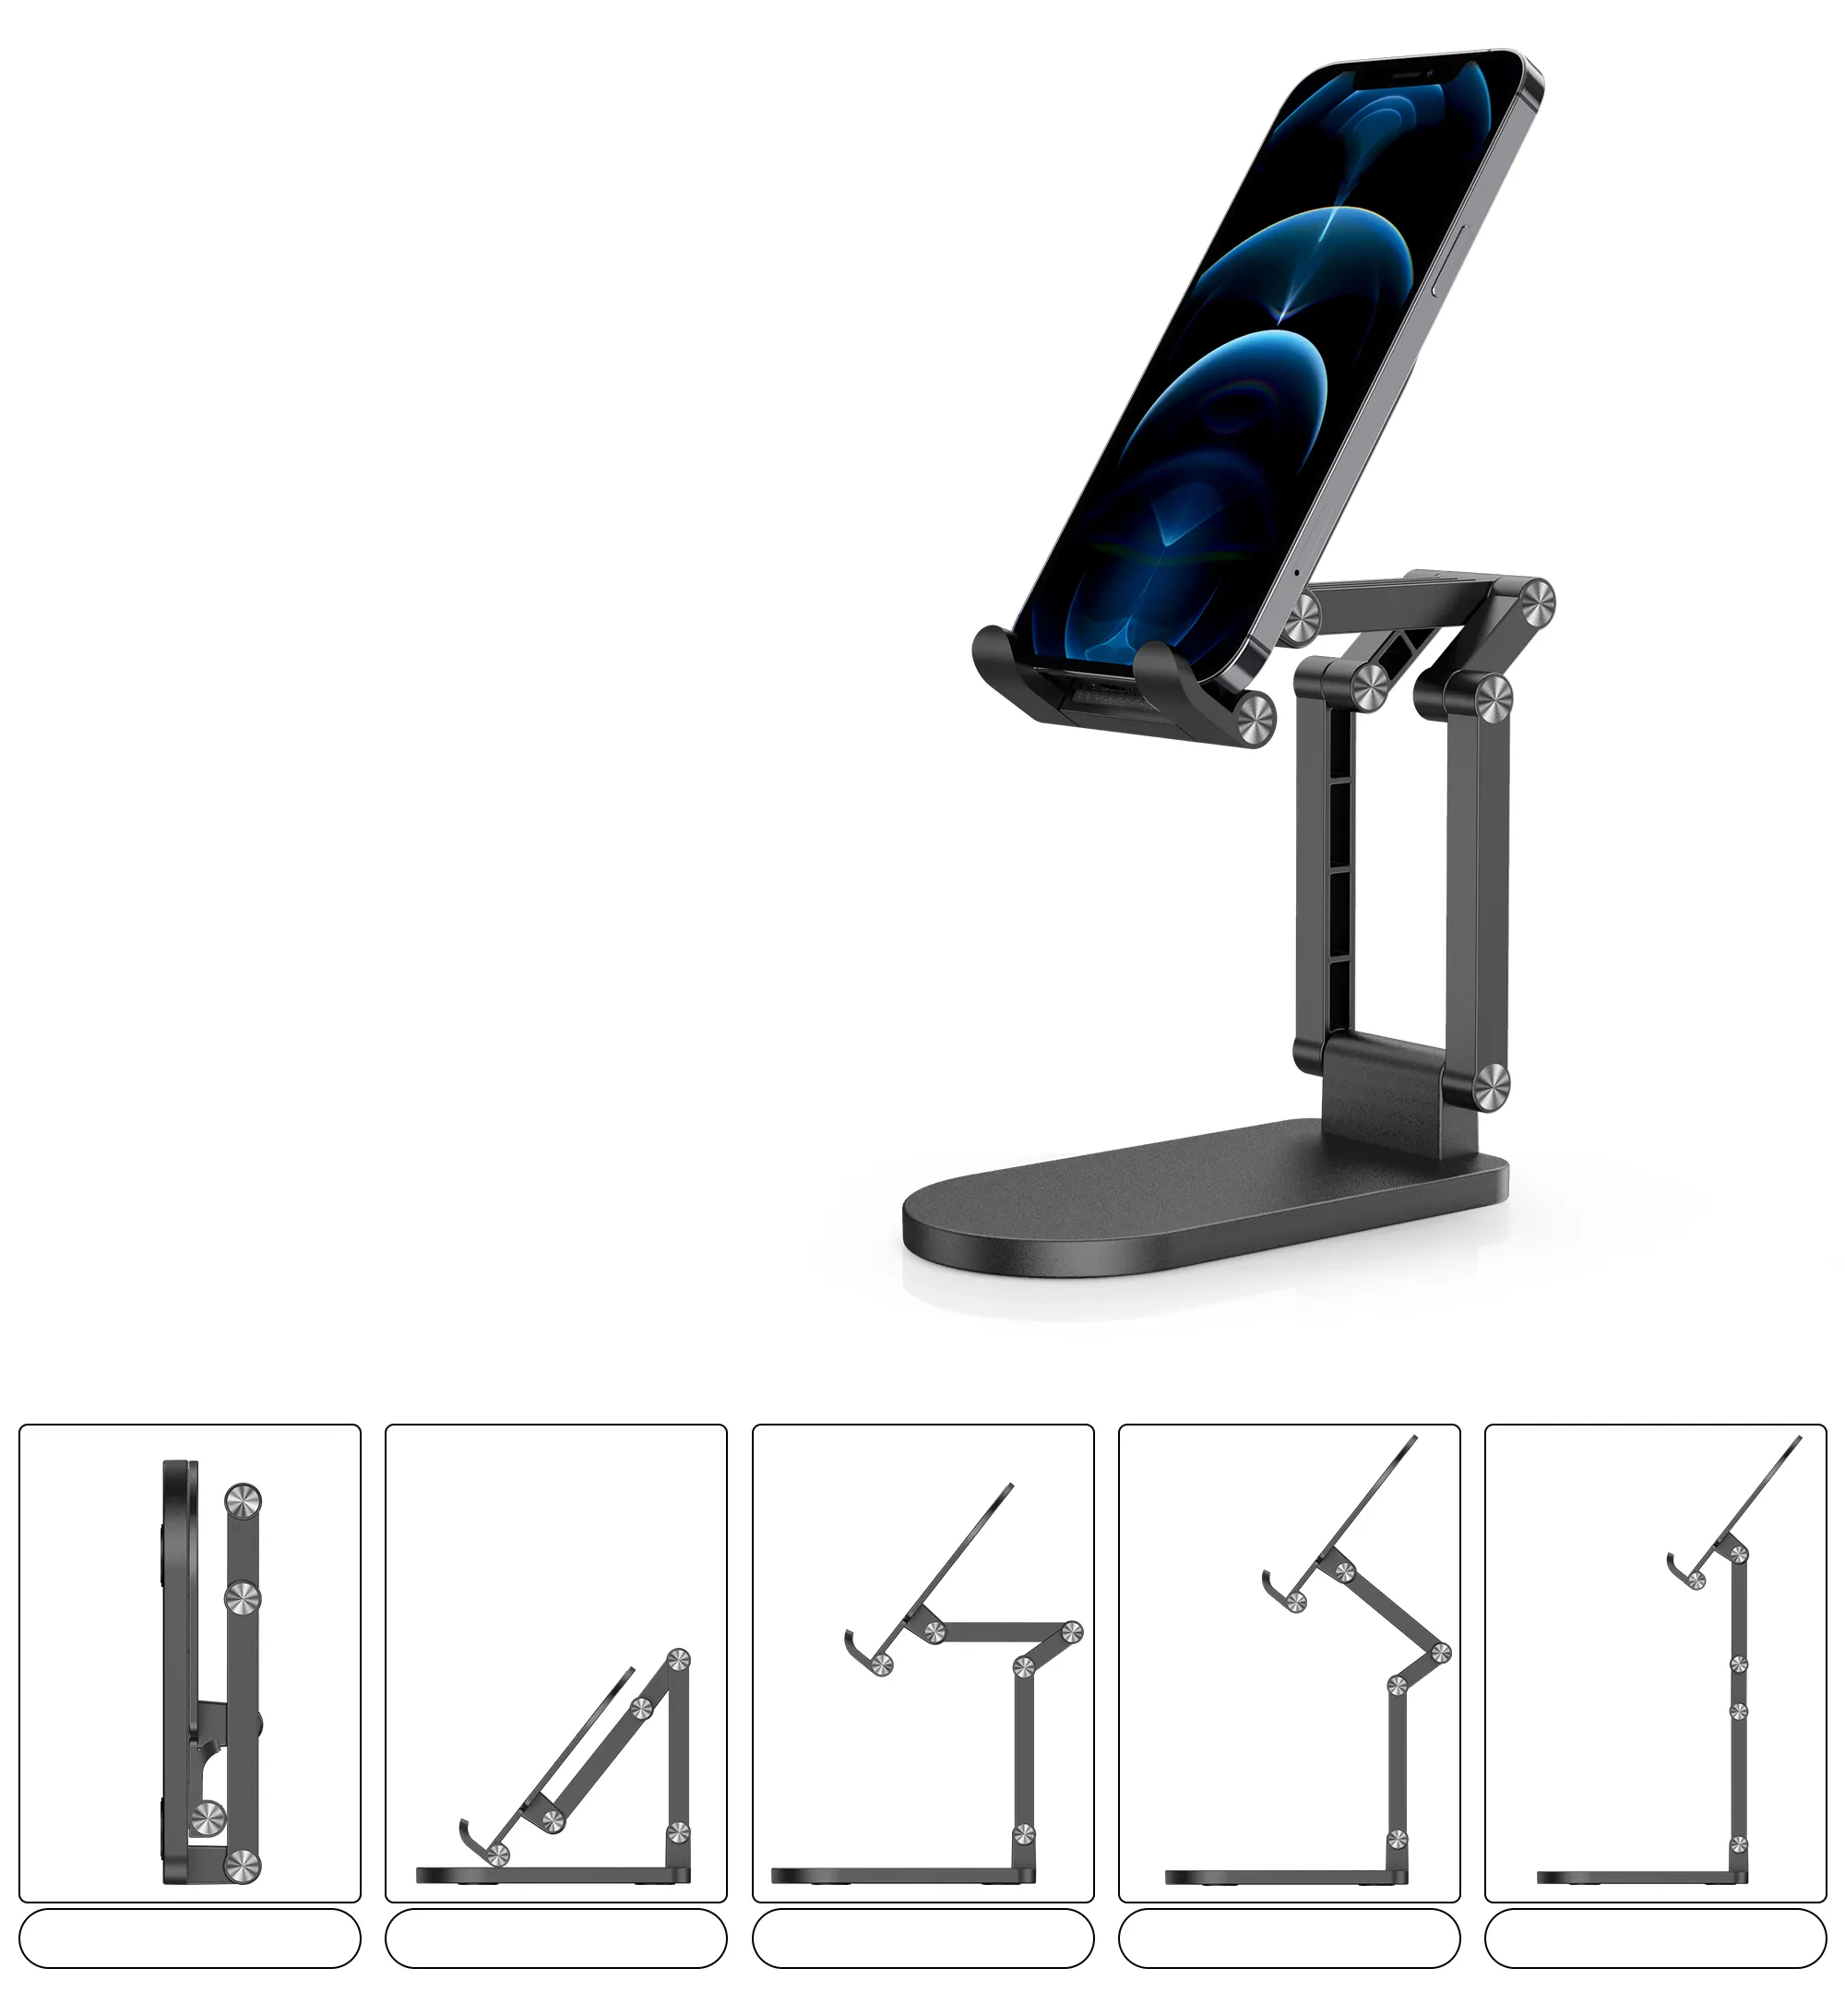 TENCHEN High quality adjustable fold flexible universal mobile phone holder tablet desktop phone stand